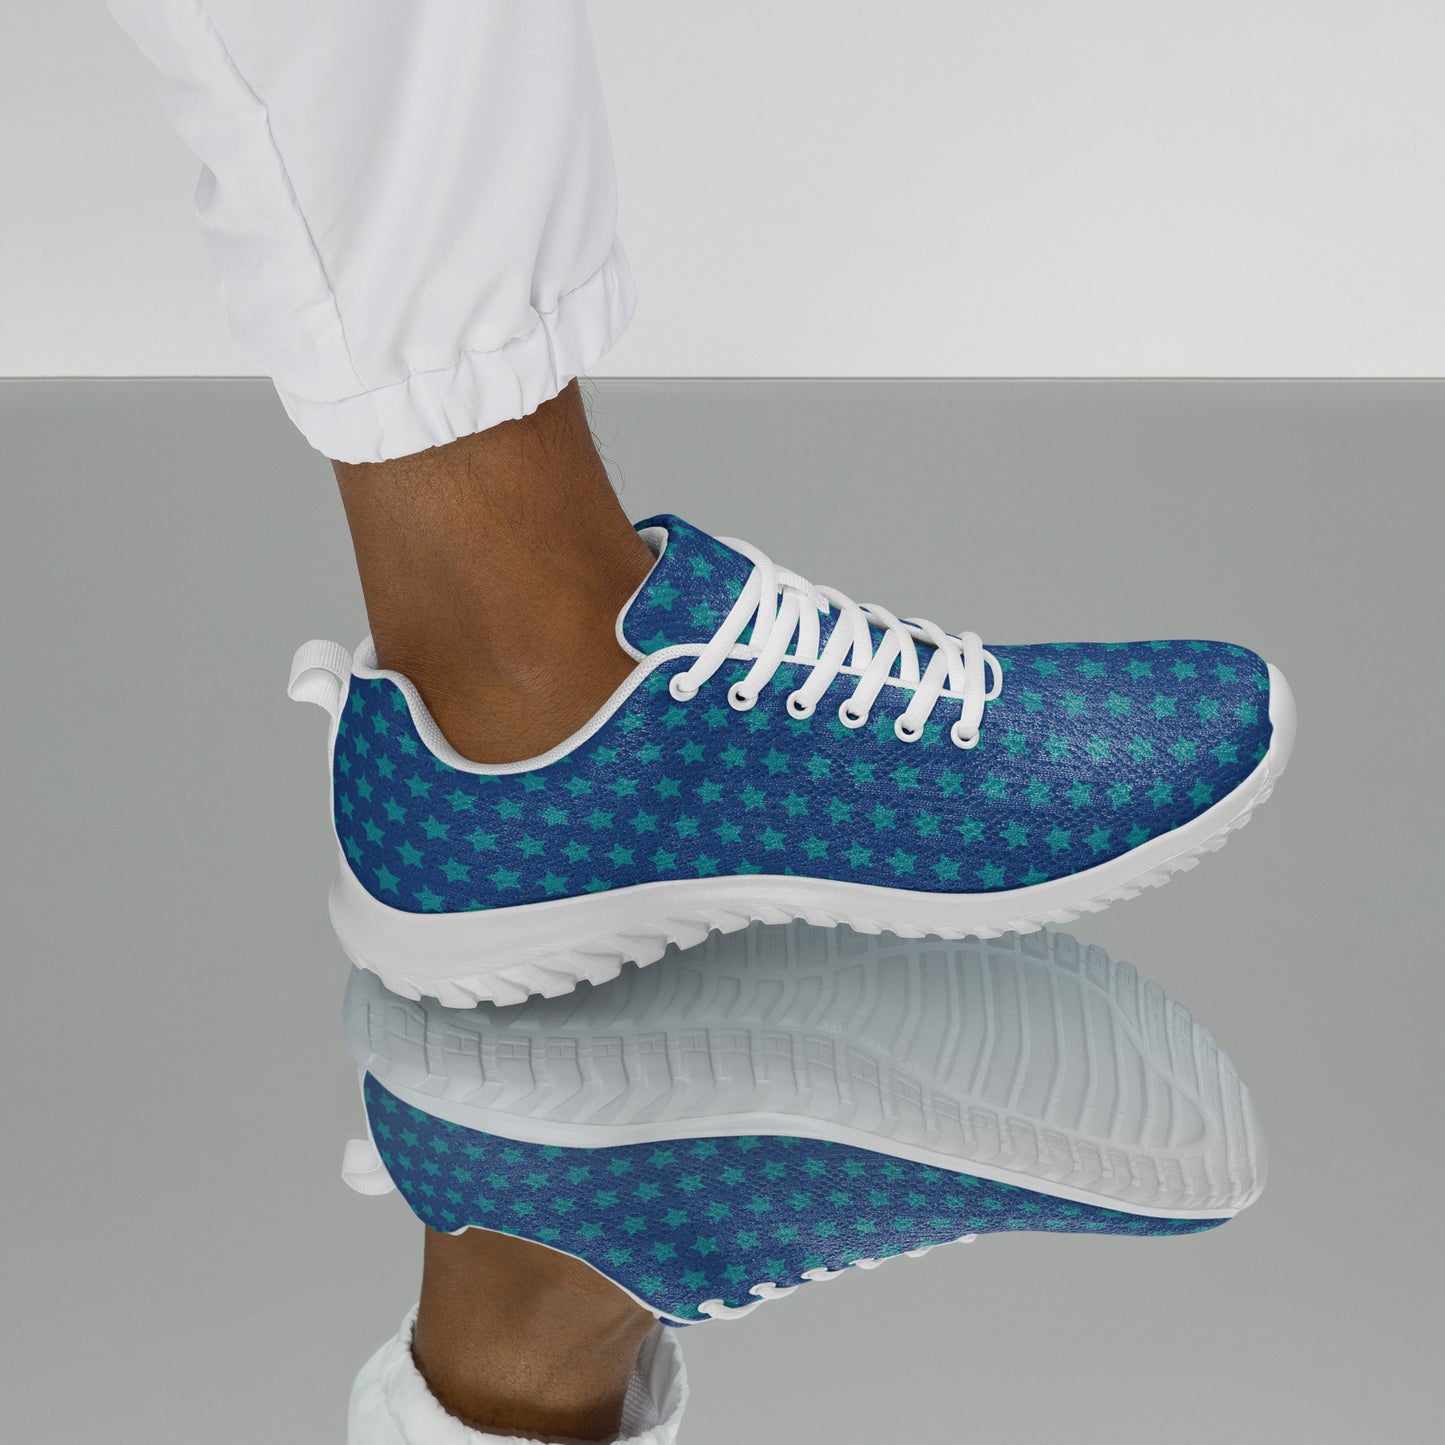 DASH Stars Blue Men’s Athletic Shoes Lightweight Breathable Design by IOBI Original Apparel